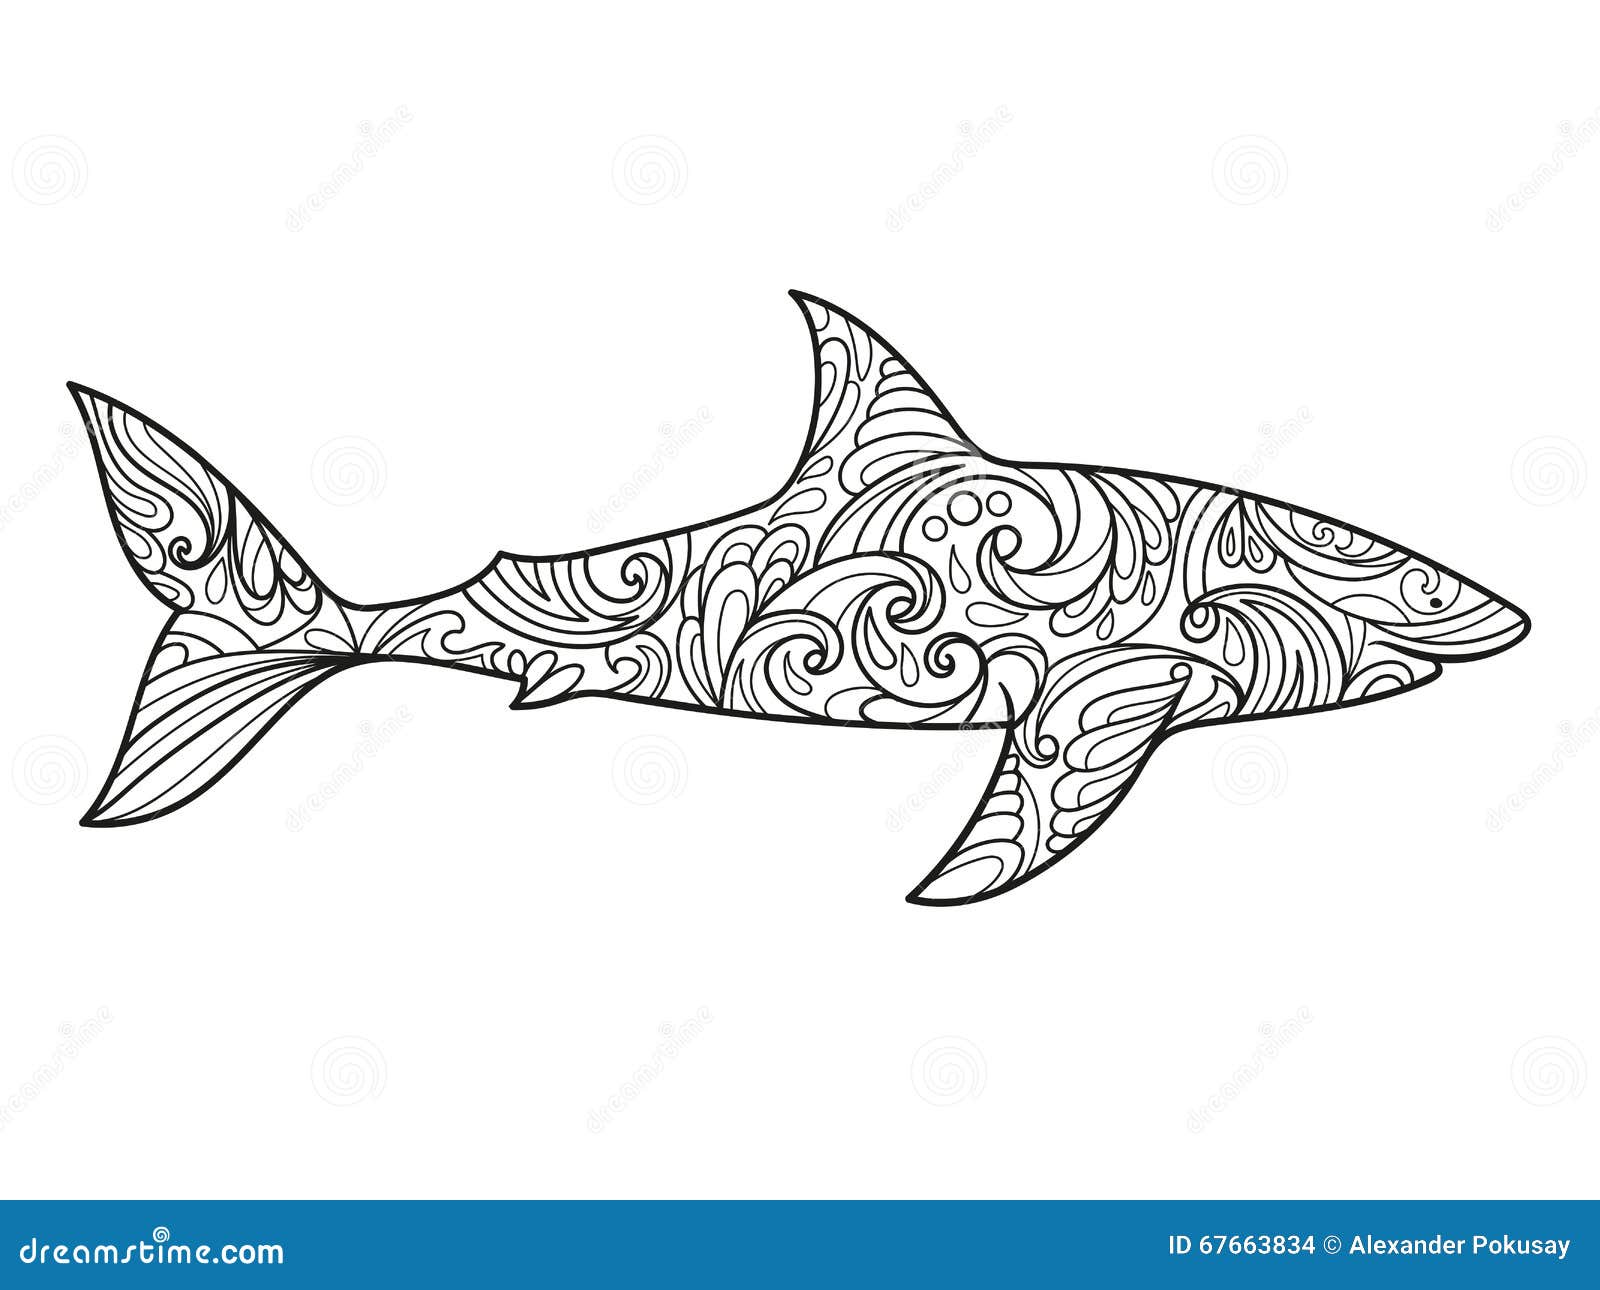 раскраска Молотоголовые акулы, акула-молот на морском дне наряду с трех рыб